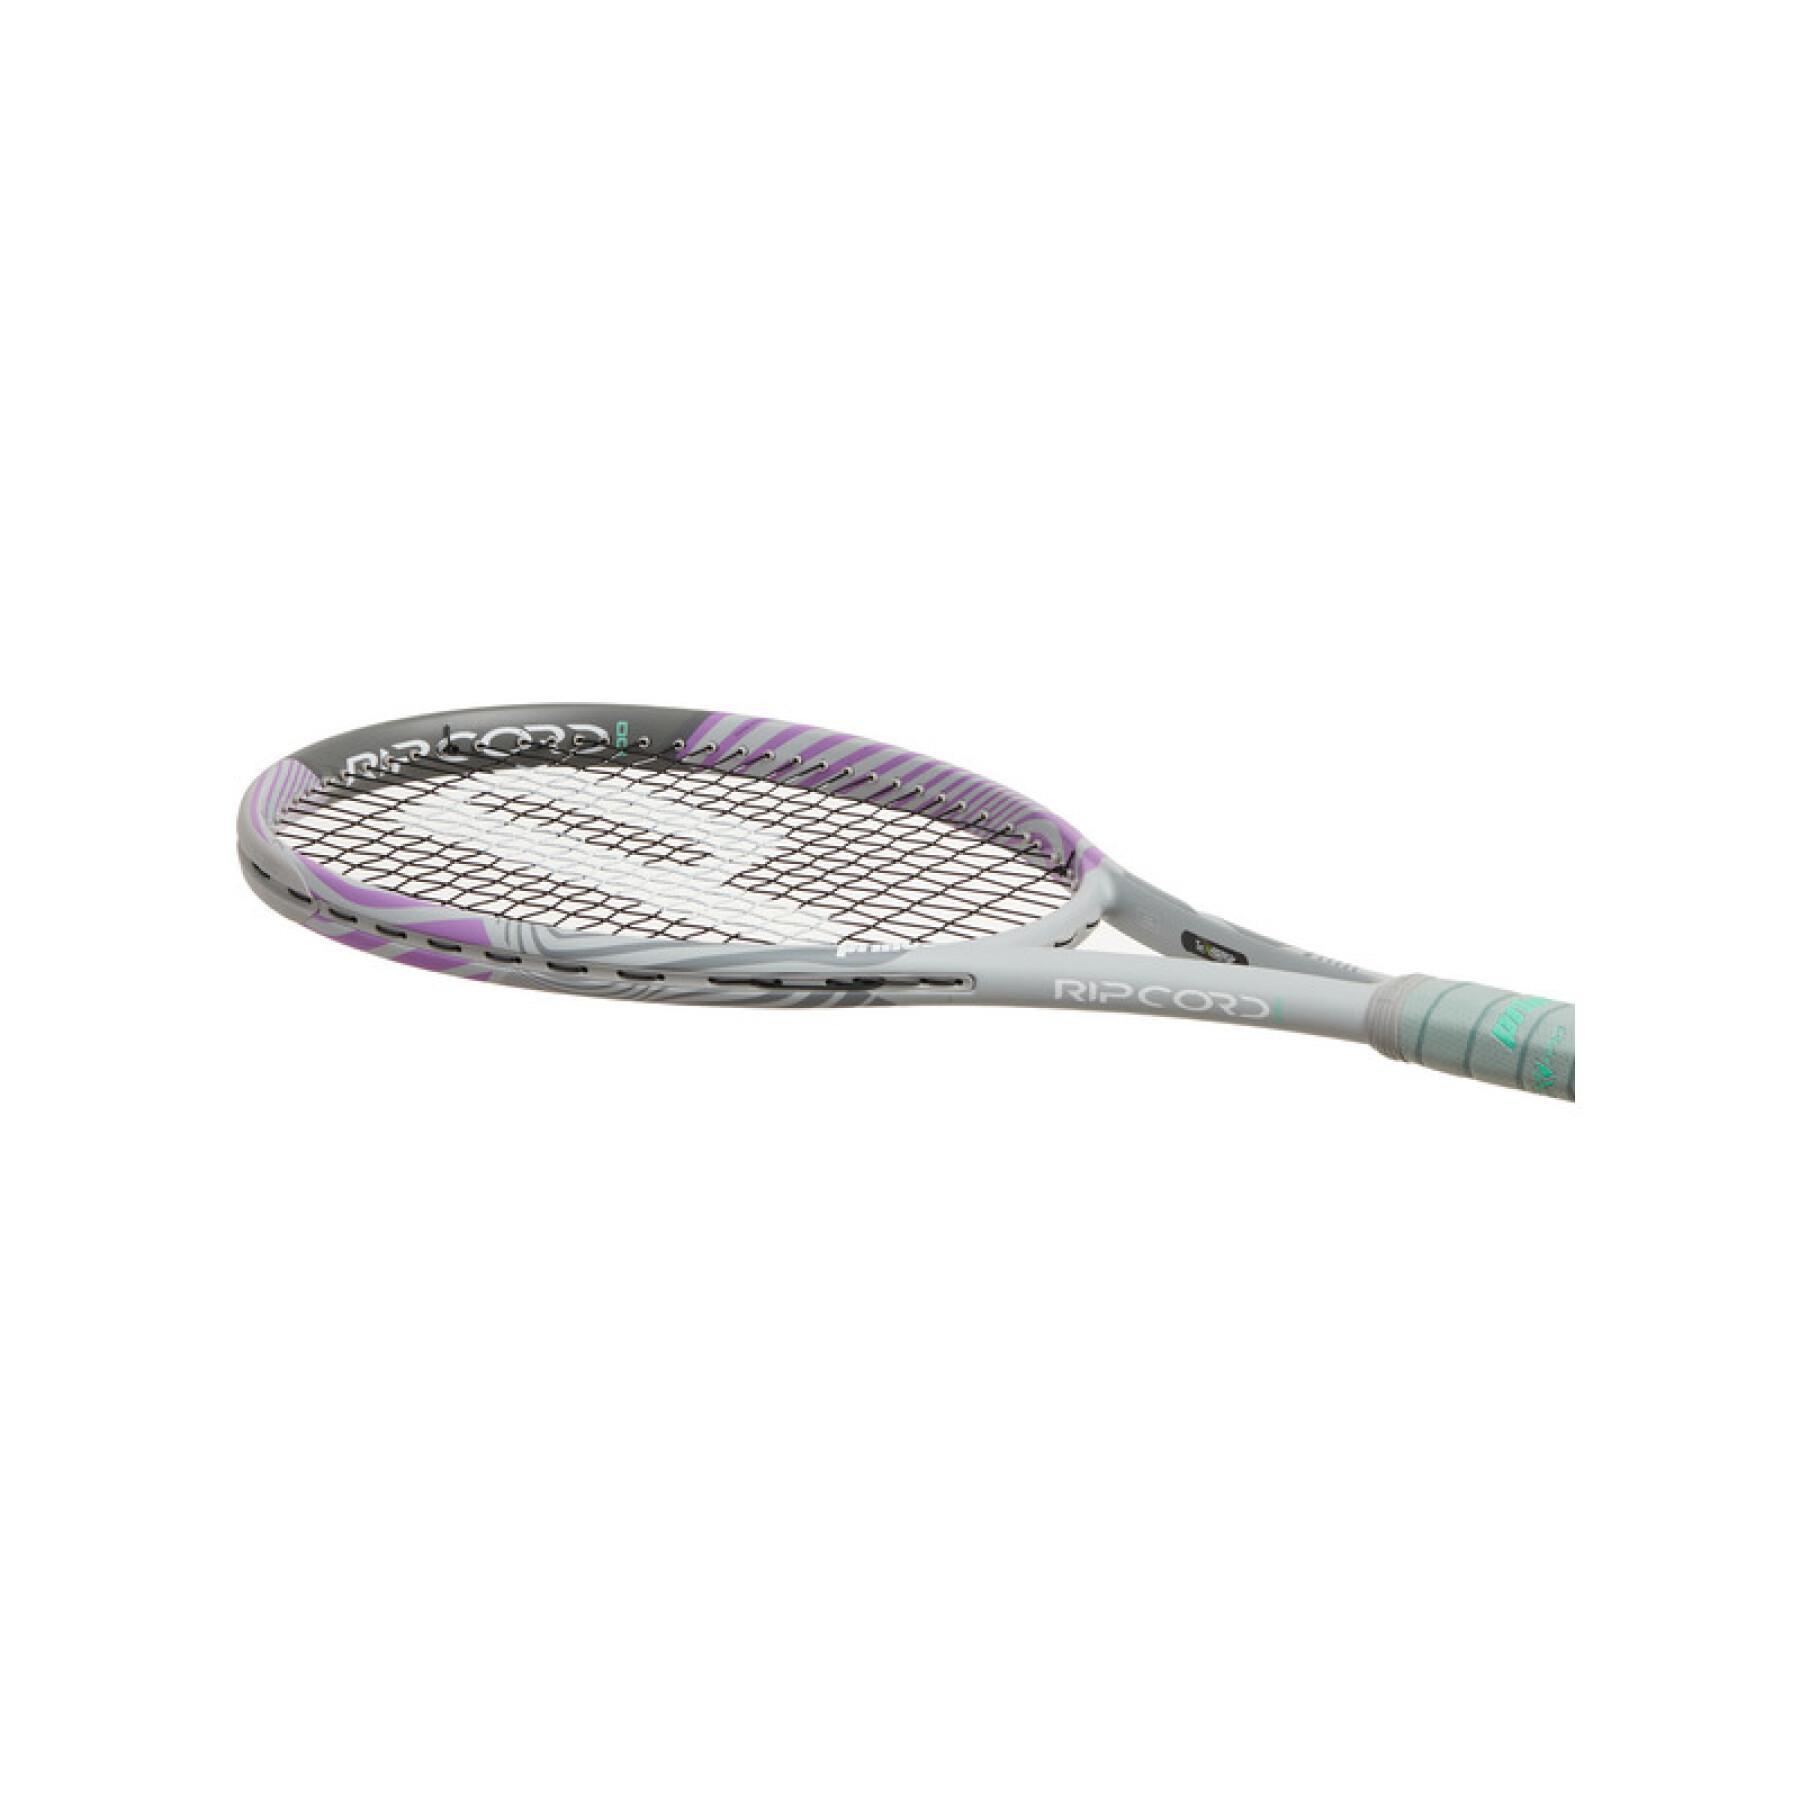 Tennisschläger Prince Ripcord 265